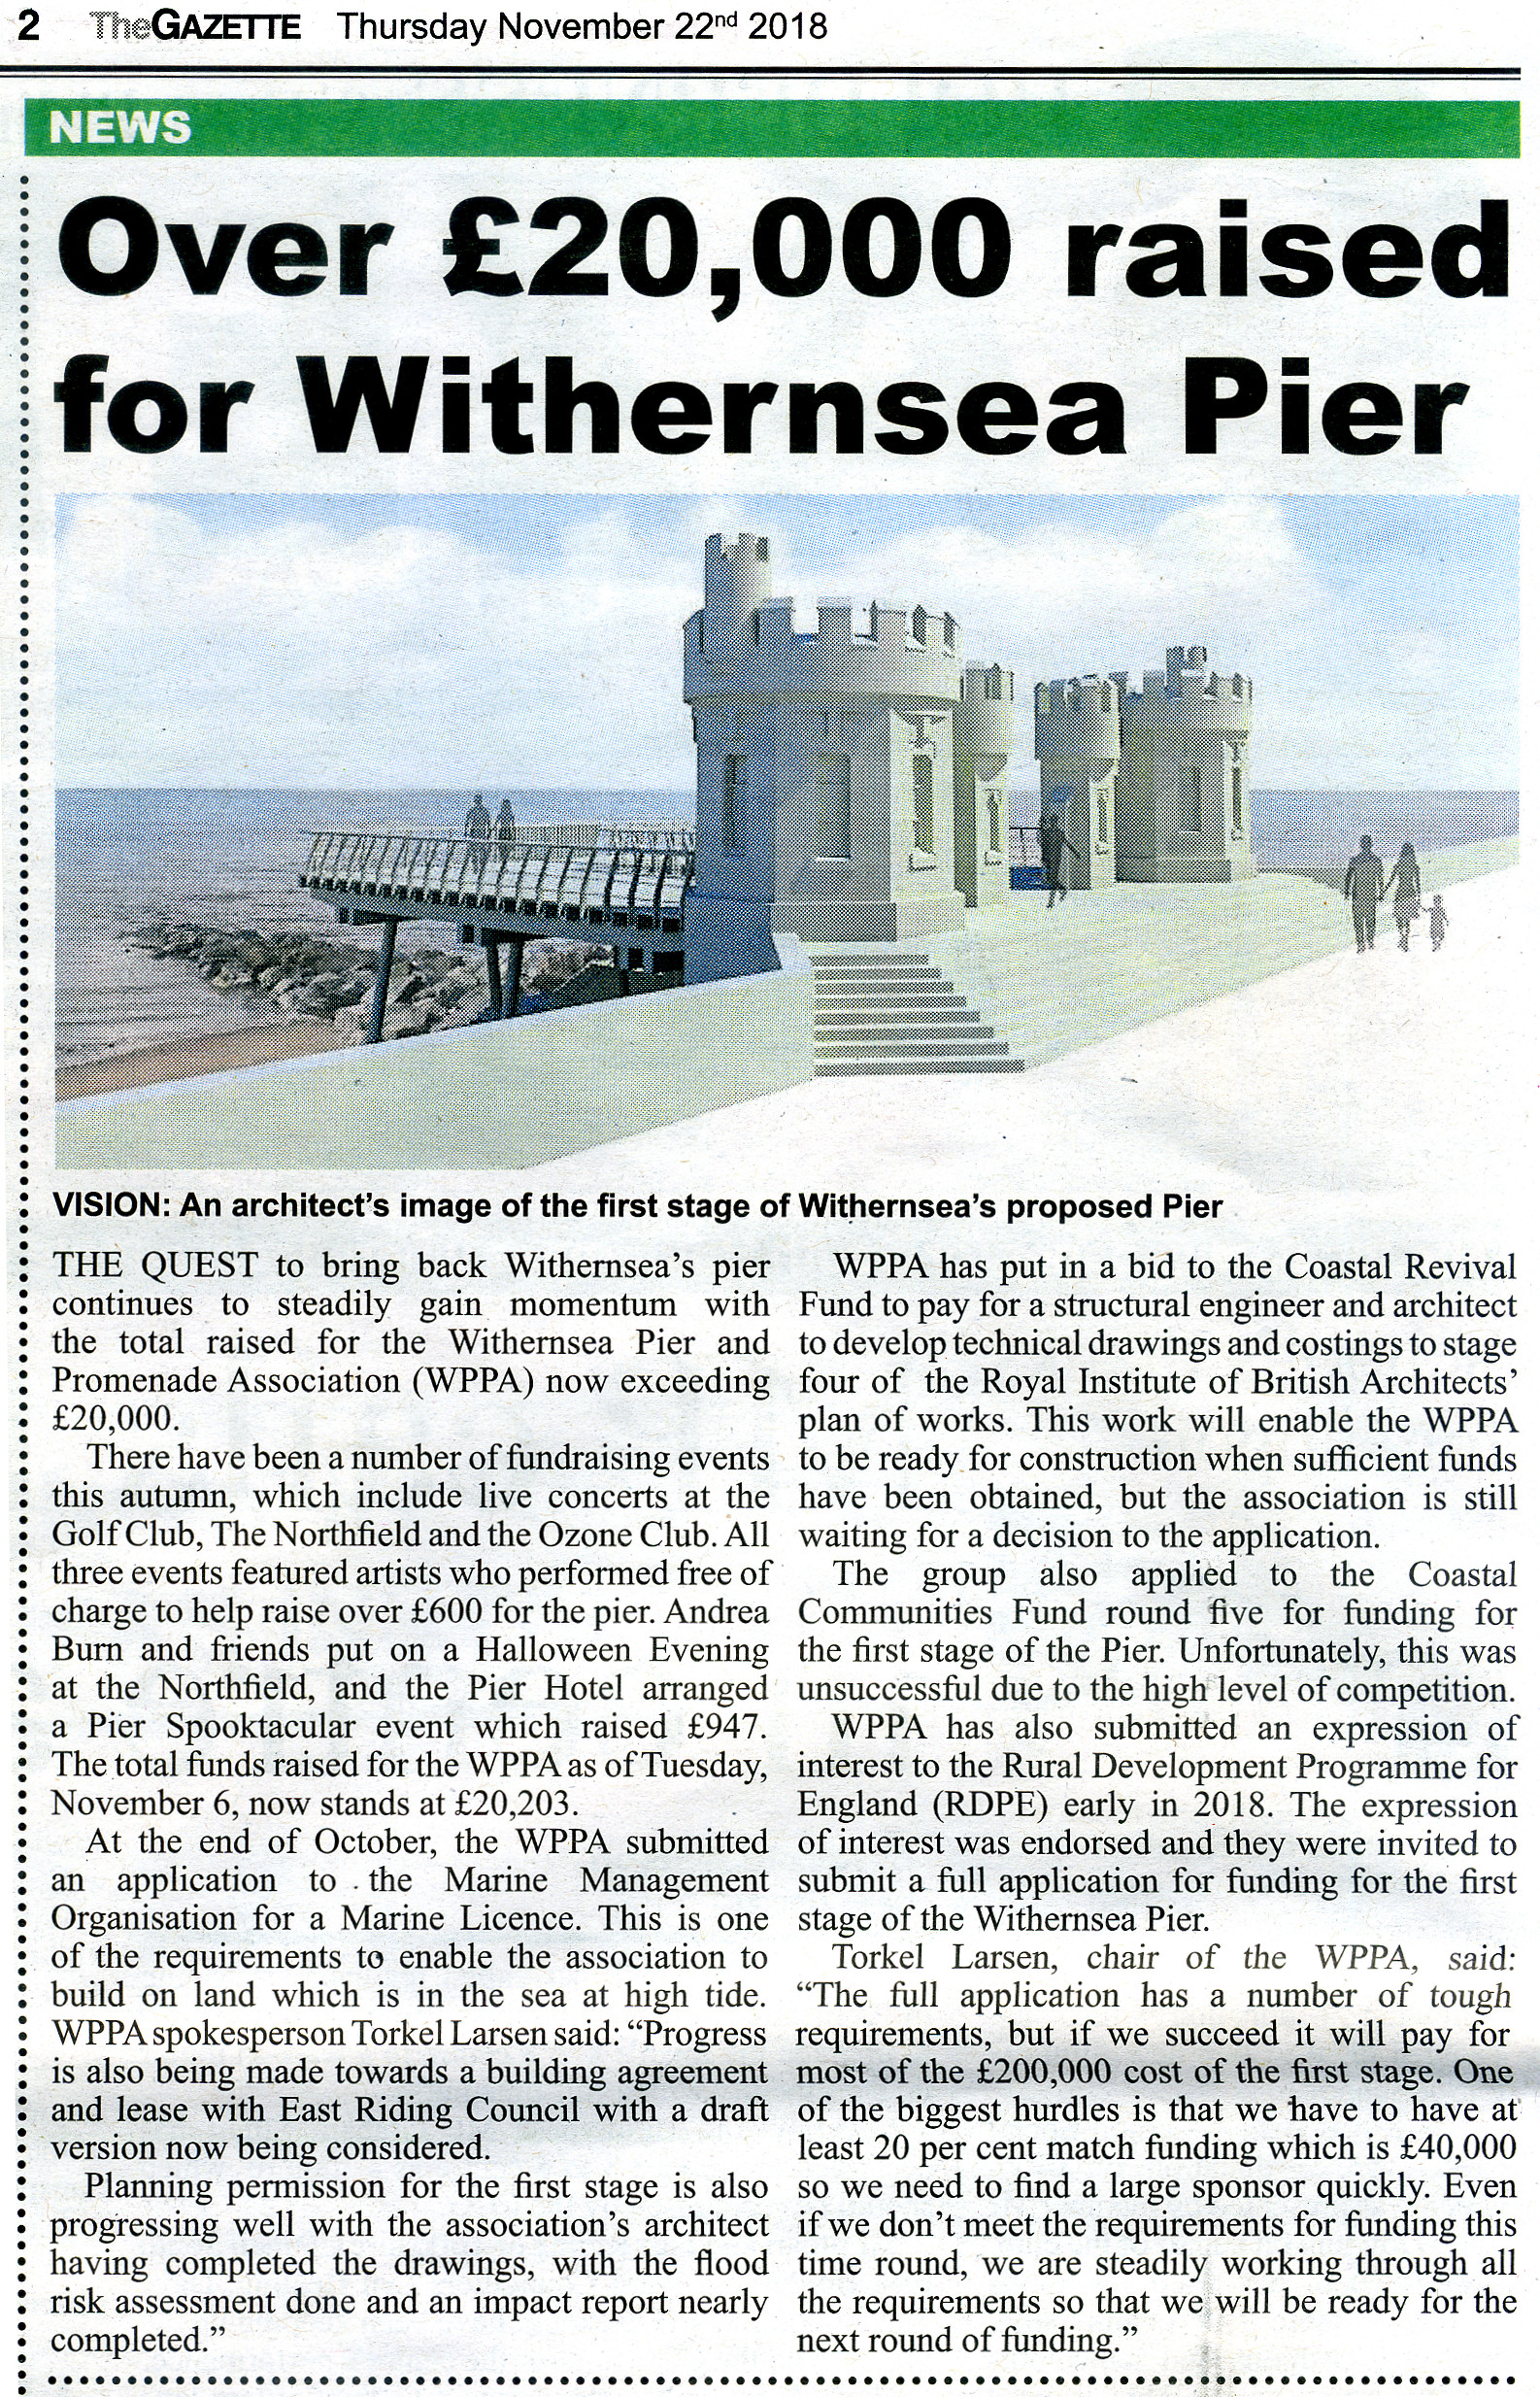 Withernsea Pier Article in Gazette